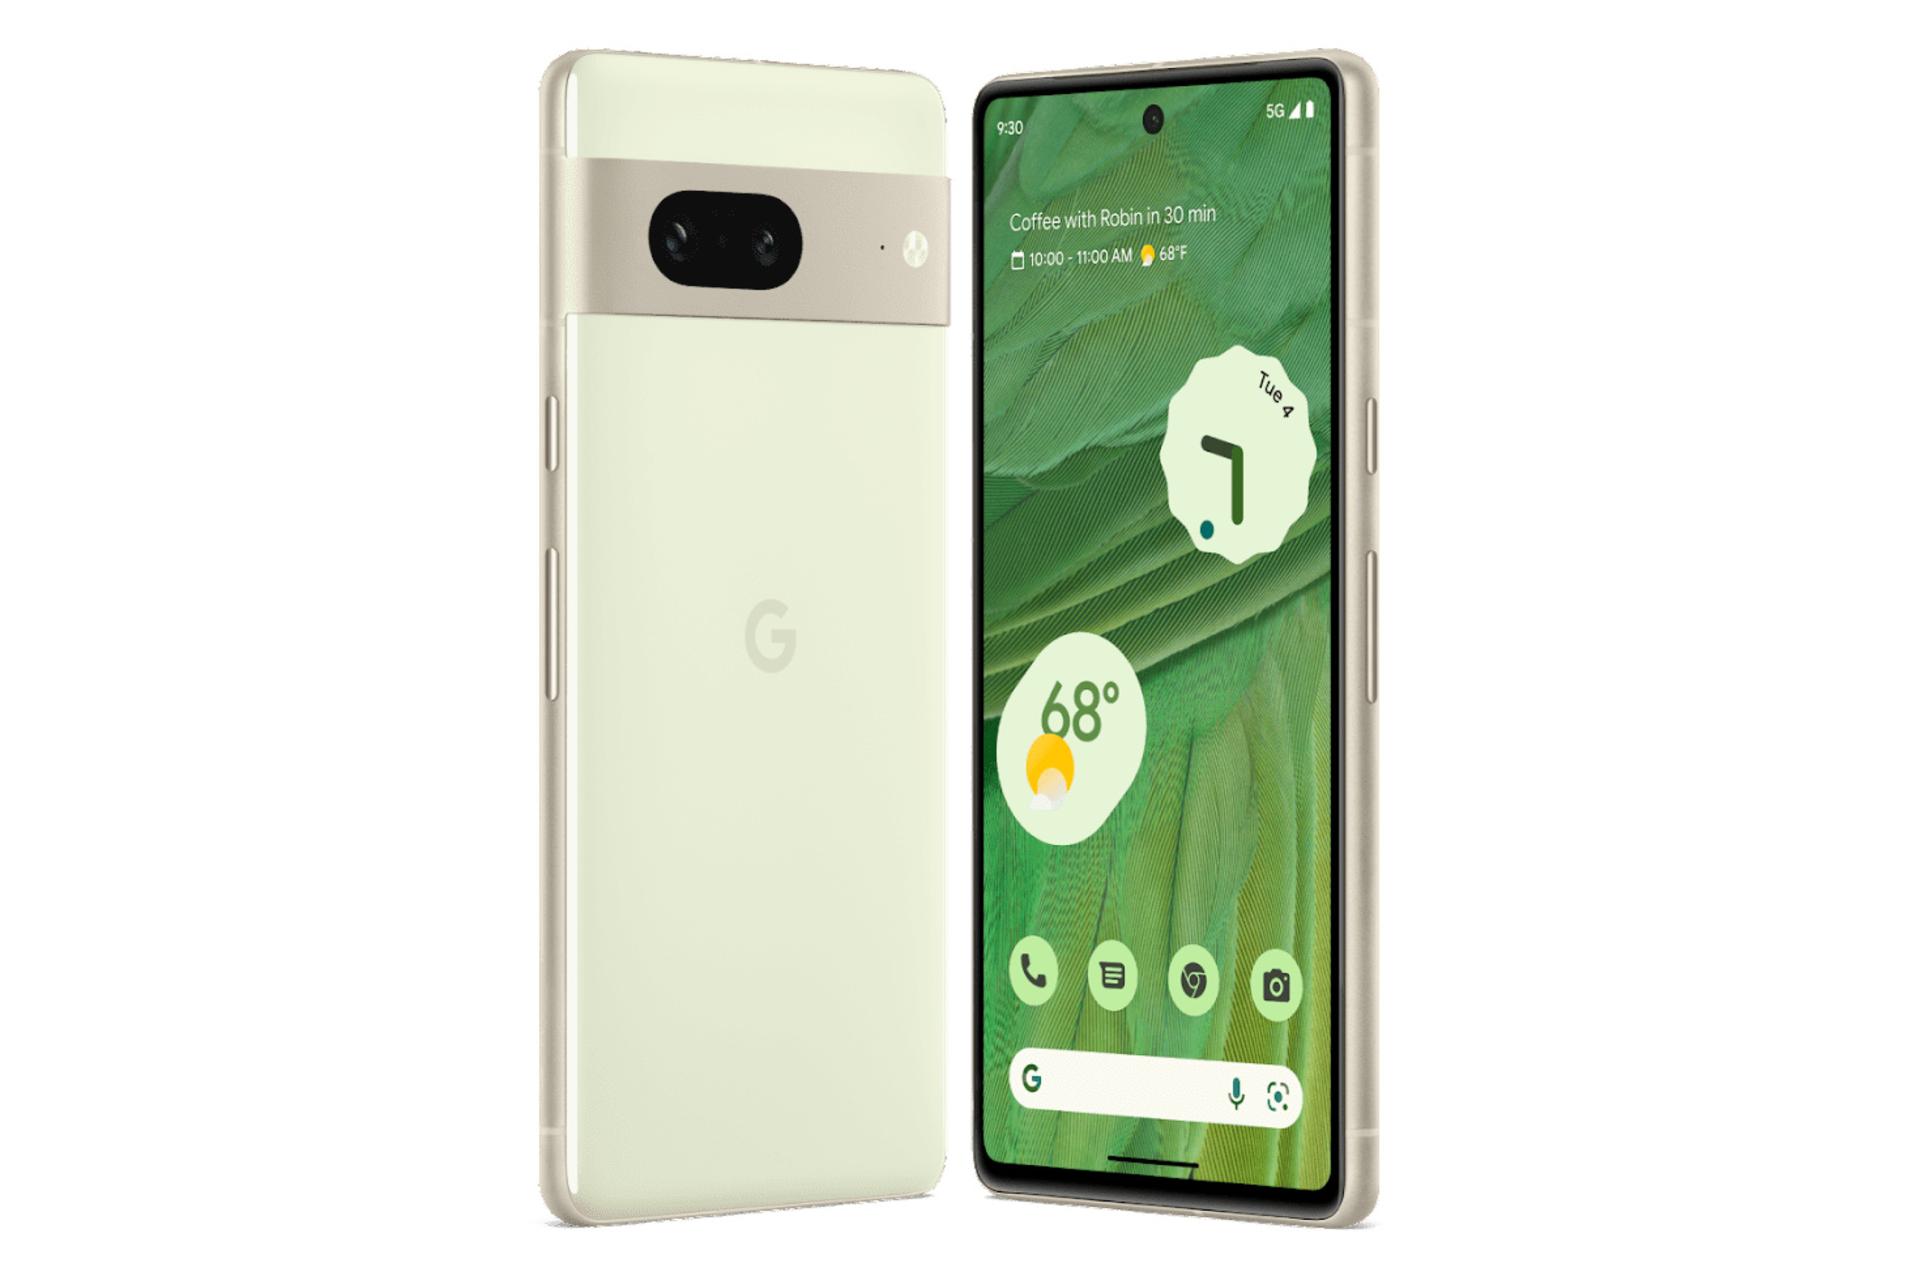 گوشی موبایل پیکسل 7 پرو گوگل / Google Pixel 7 Pro سبز روشن